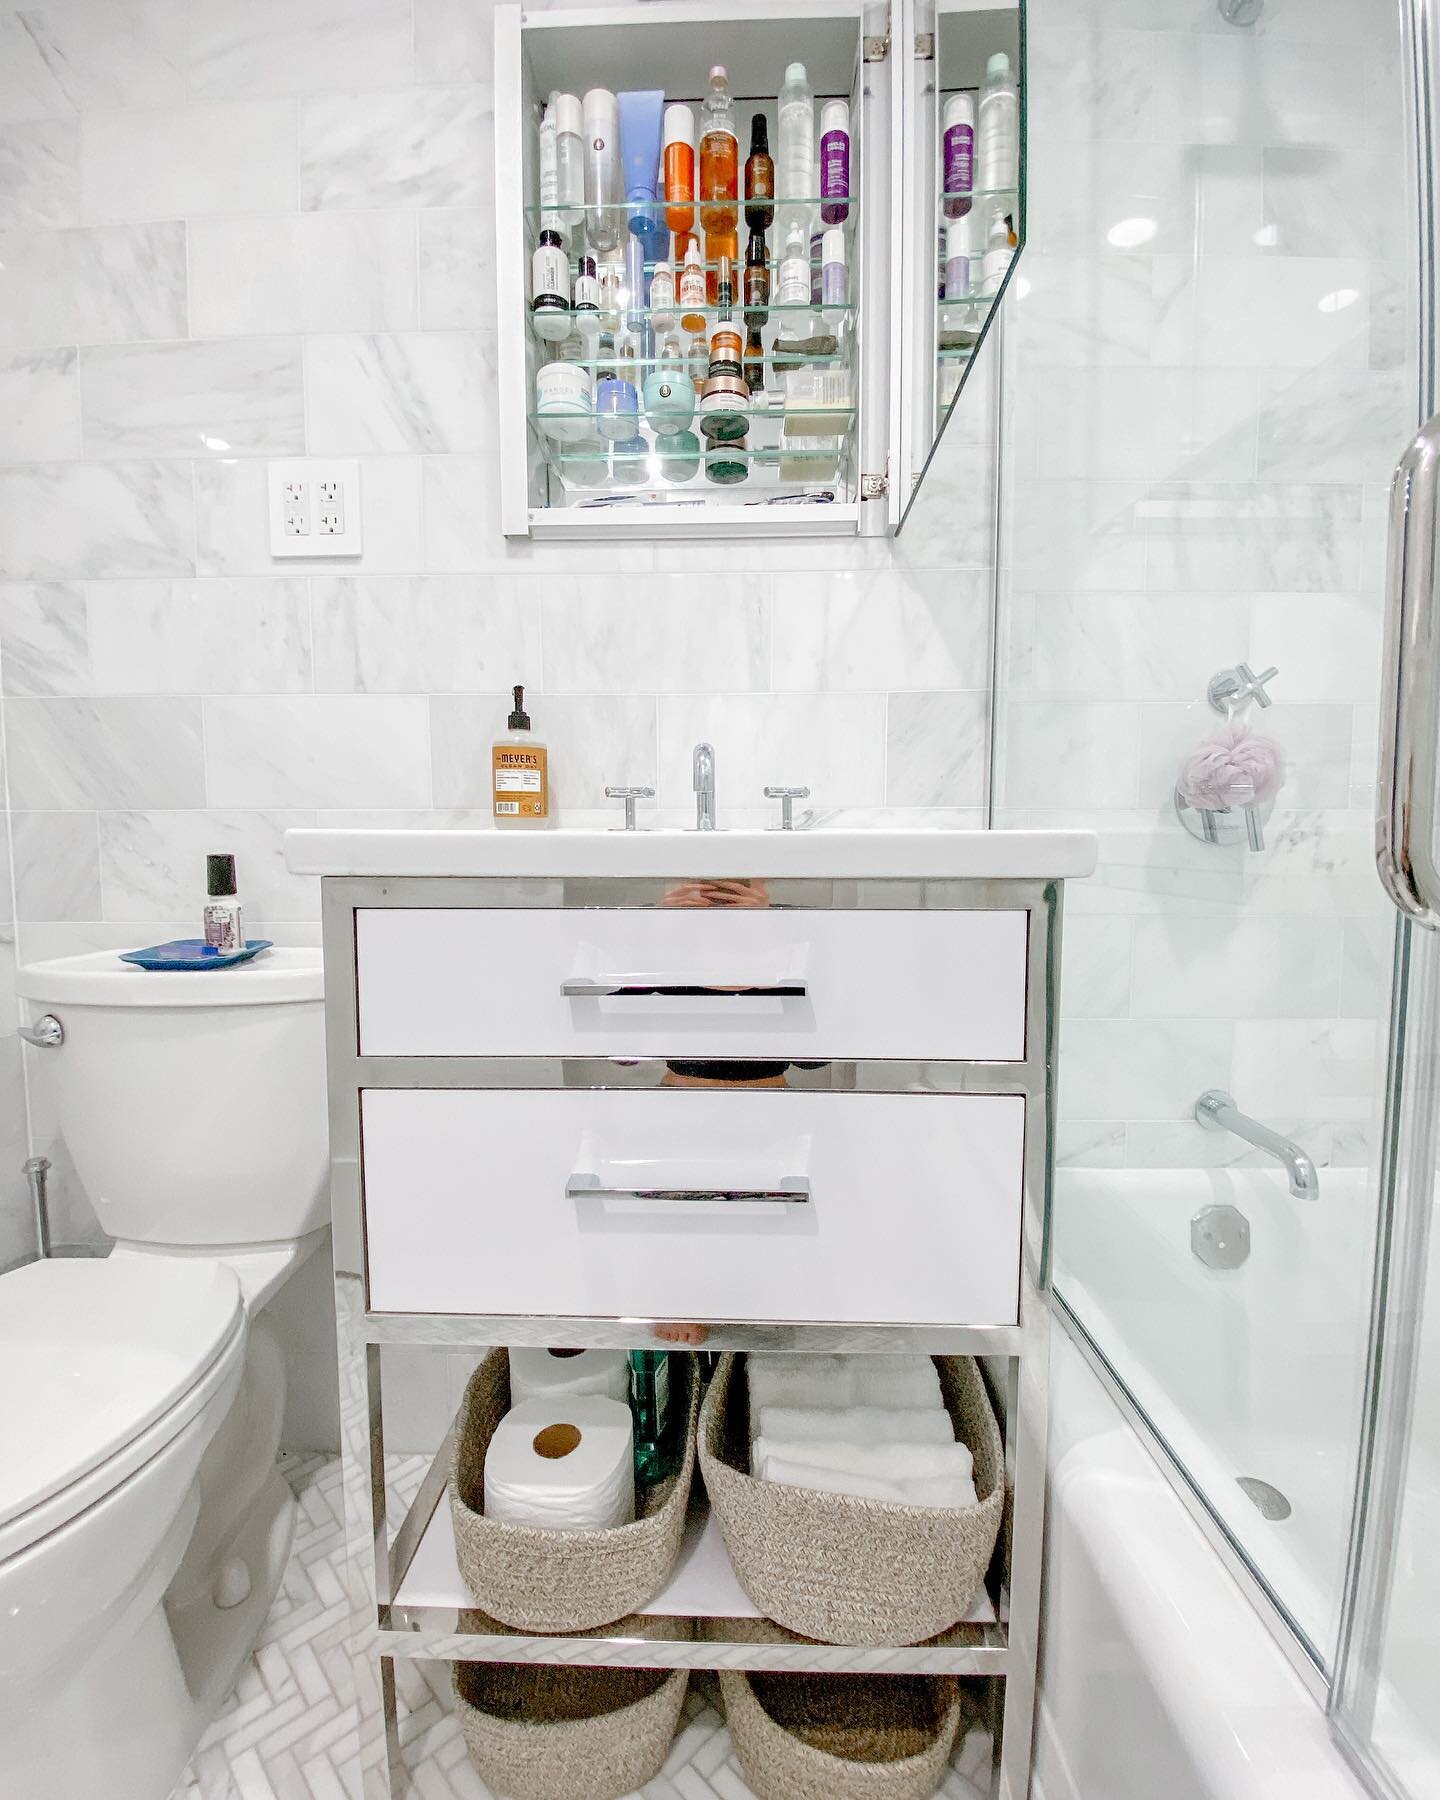 A little tetris meets nonadjustable shelves, a little basket repurposing meets functionality and design
.
.
.
.
#organize #organization #organizationtips #organizationhacks #home #bathroom #skincare #beauty #beautyproducts